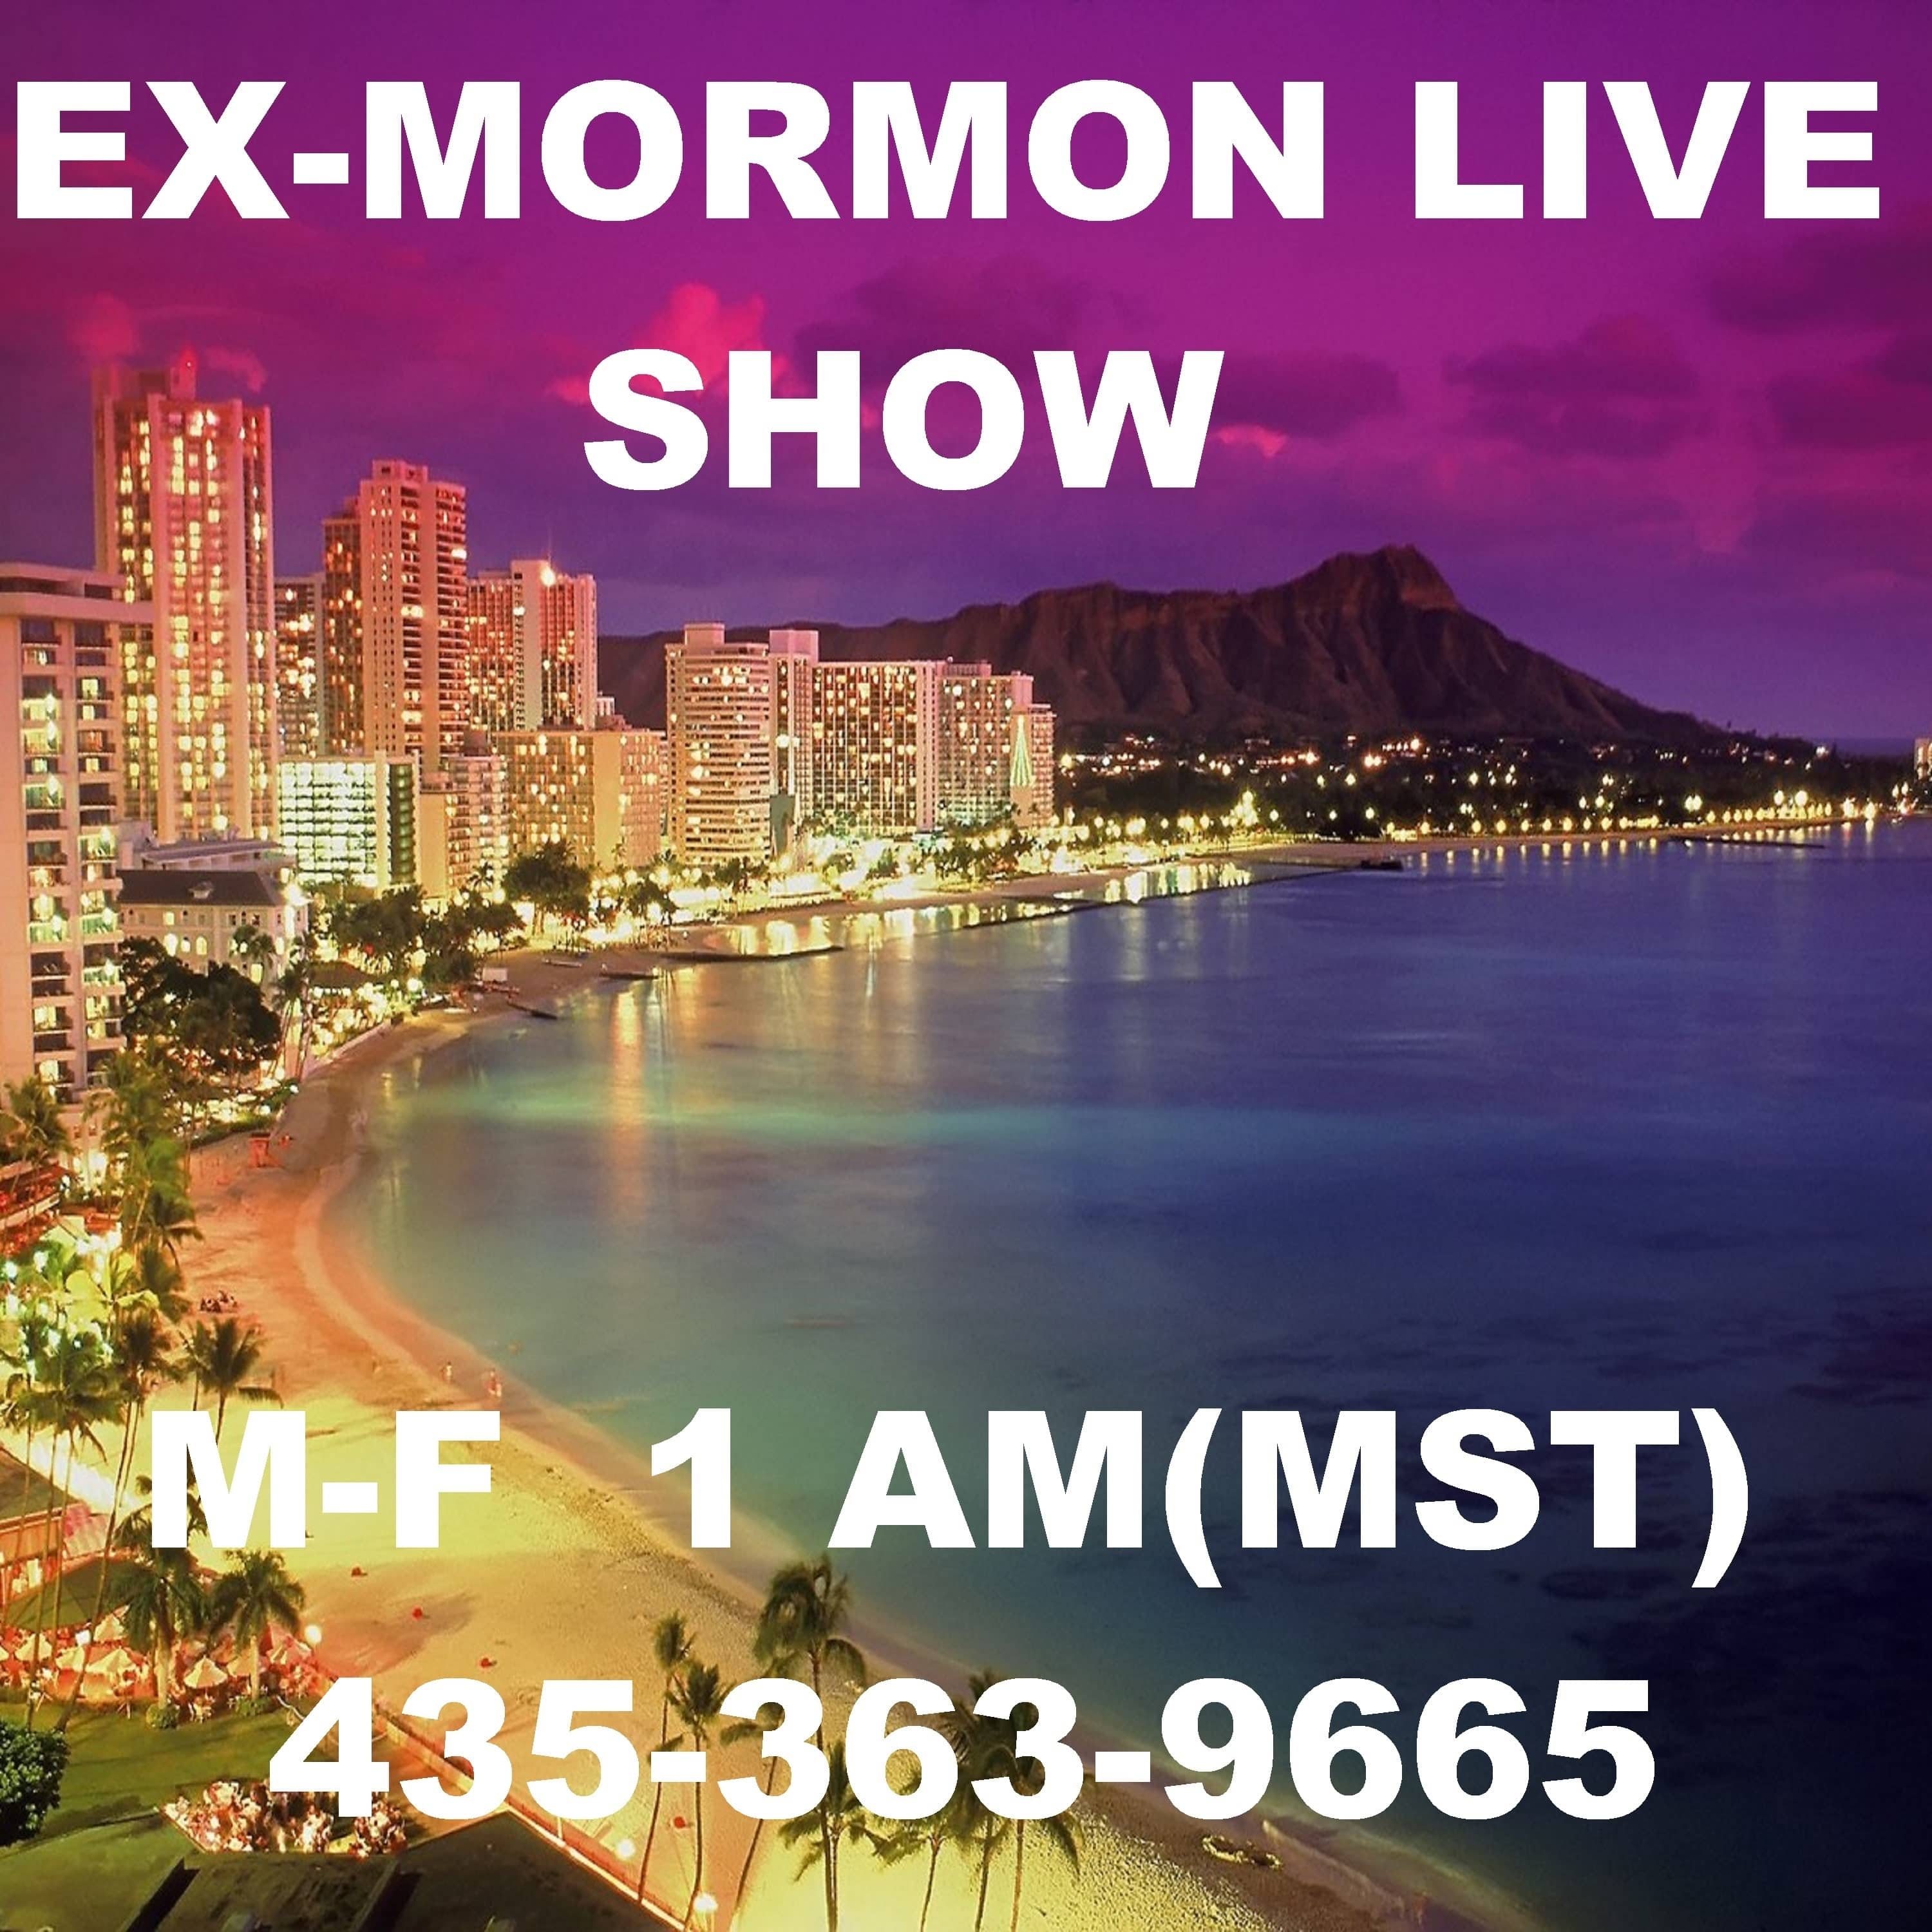 EX-MORMON LIVE SHOW